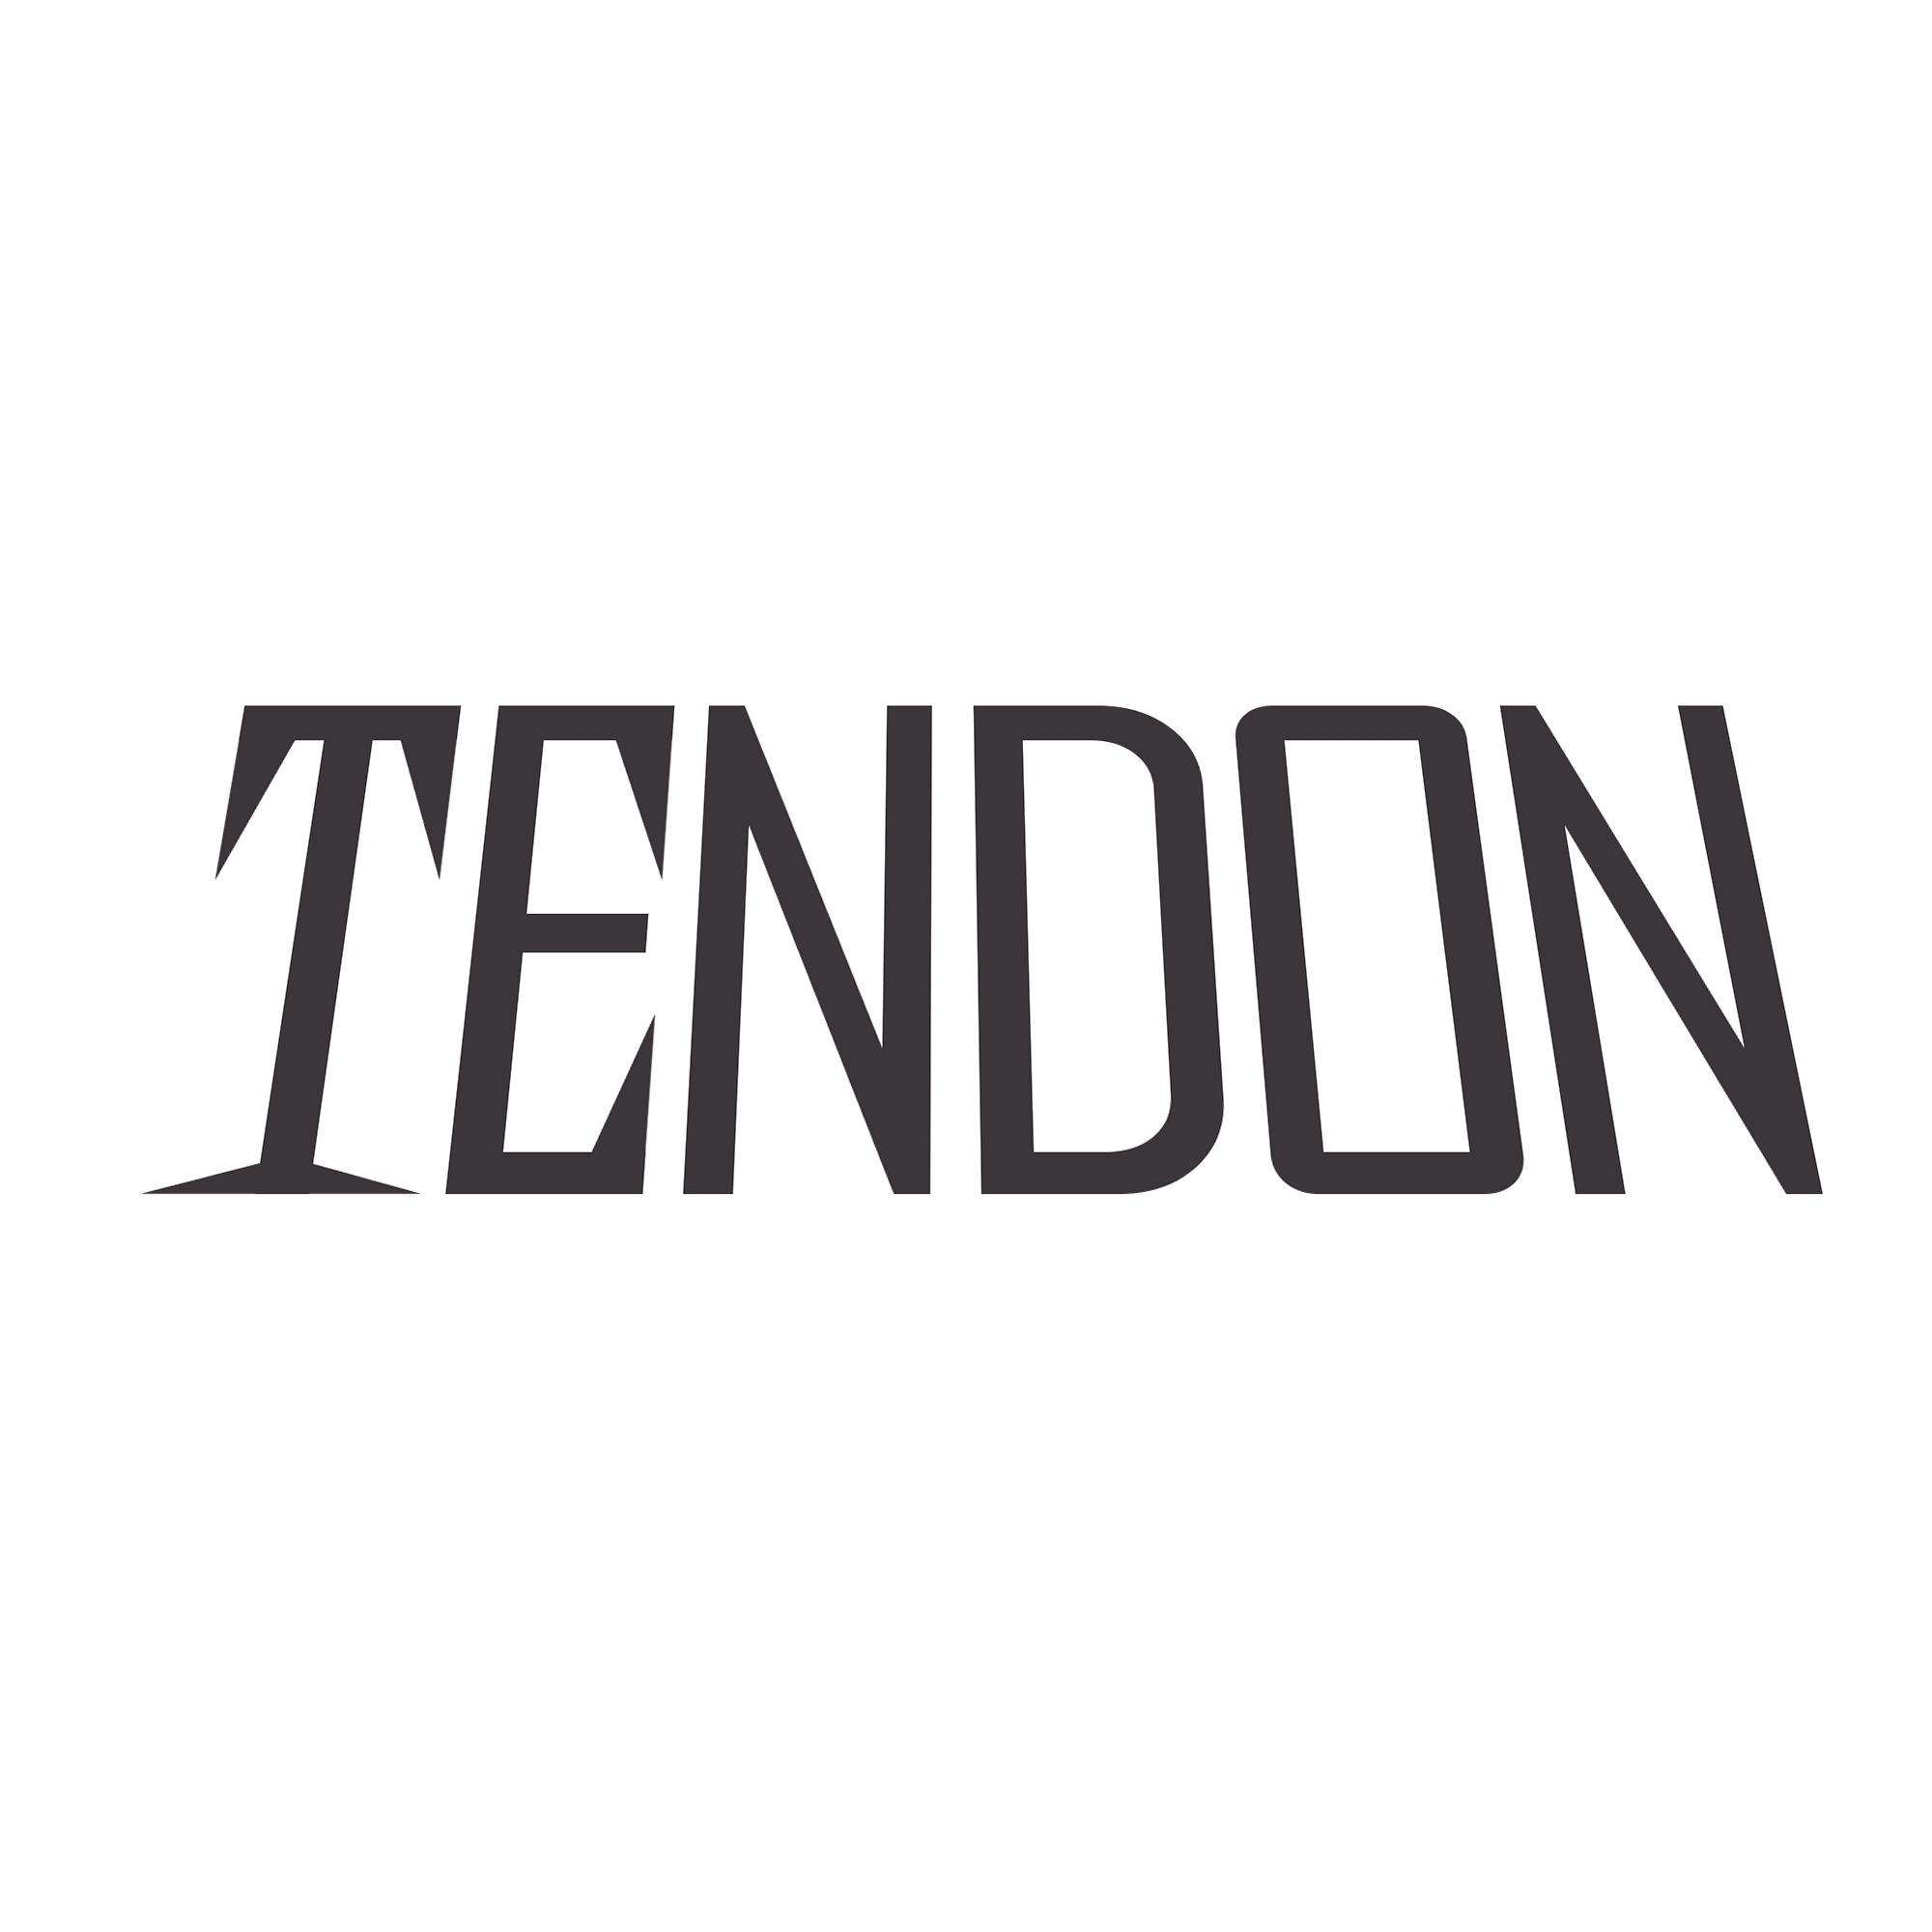 TENDON